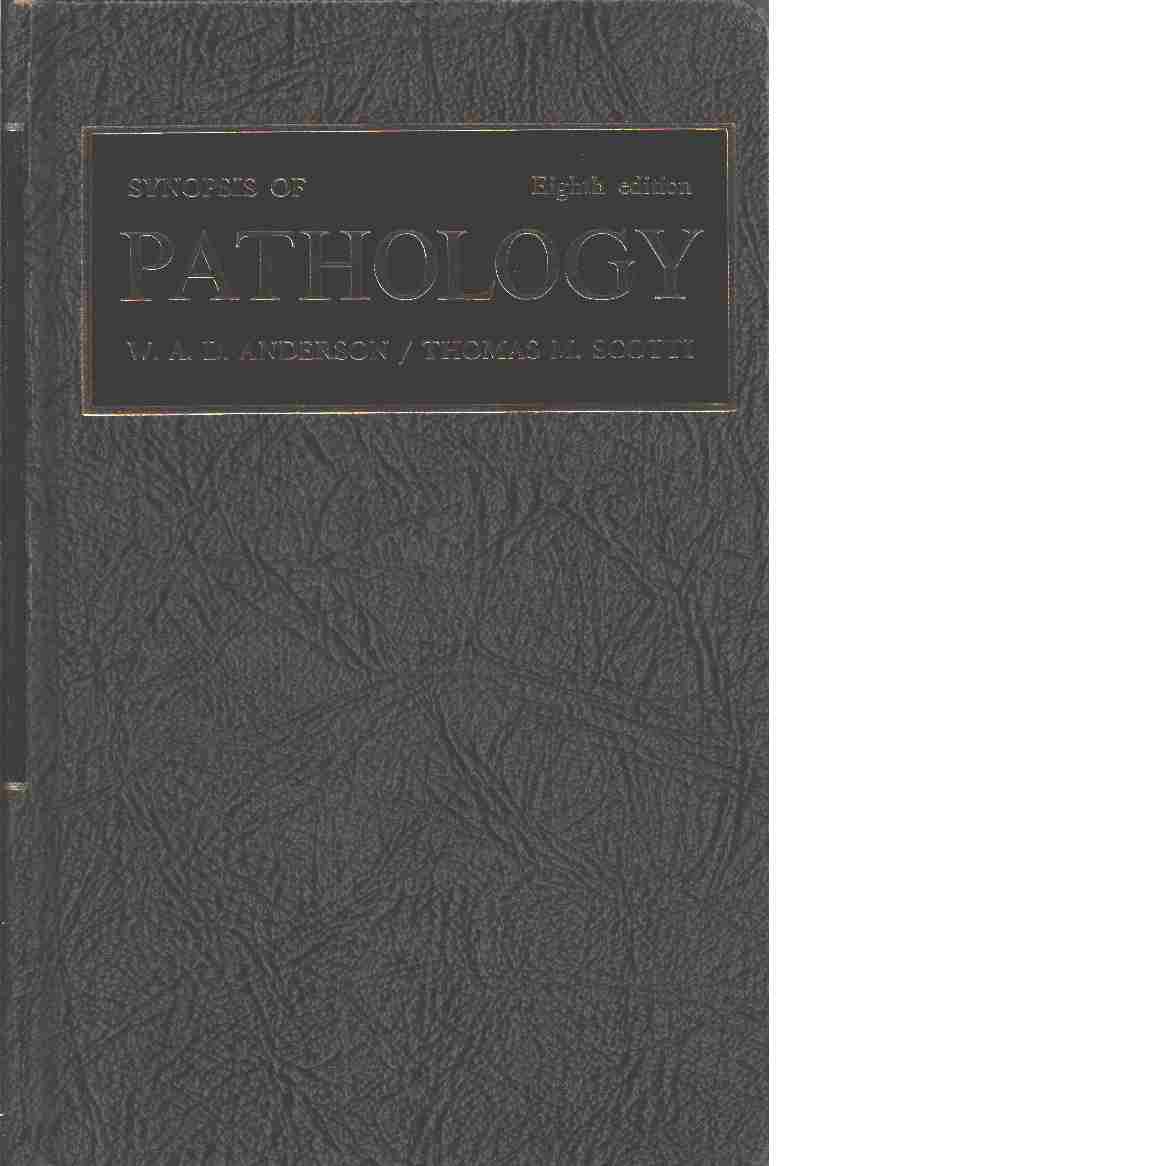 Synopsis of pathology - Anderson, William Arnold Douglas